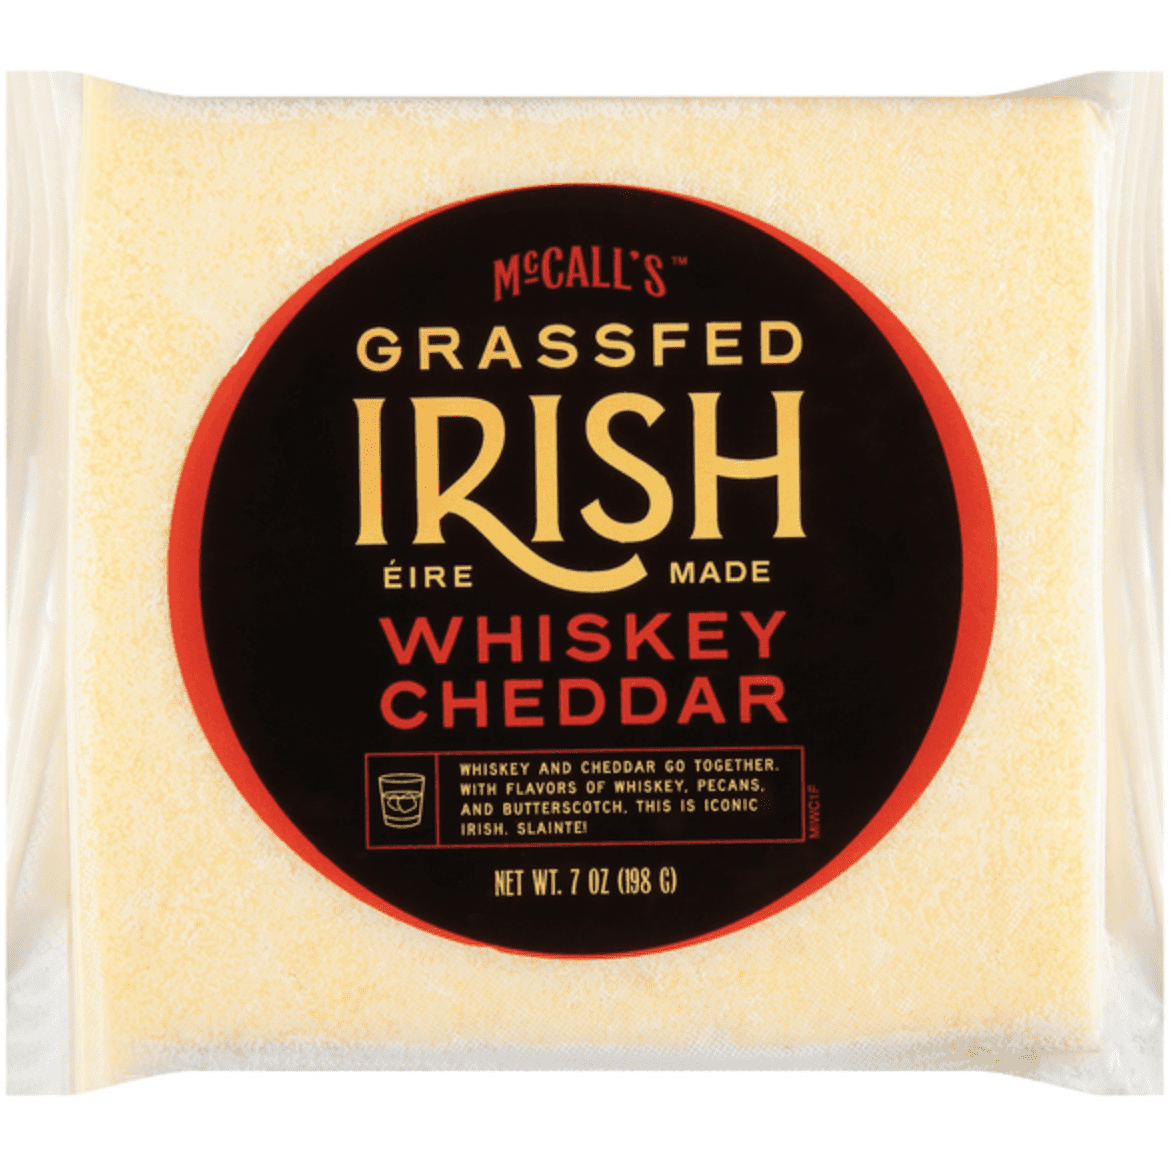 McCall's Grassfed Irish Whiskey Cheddar